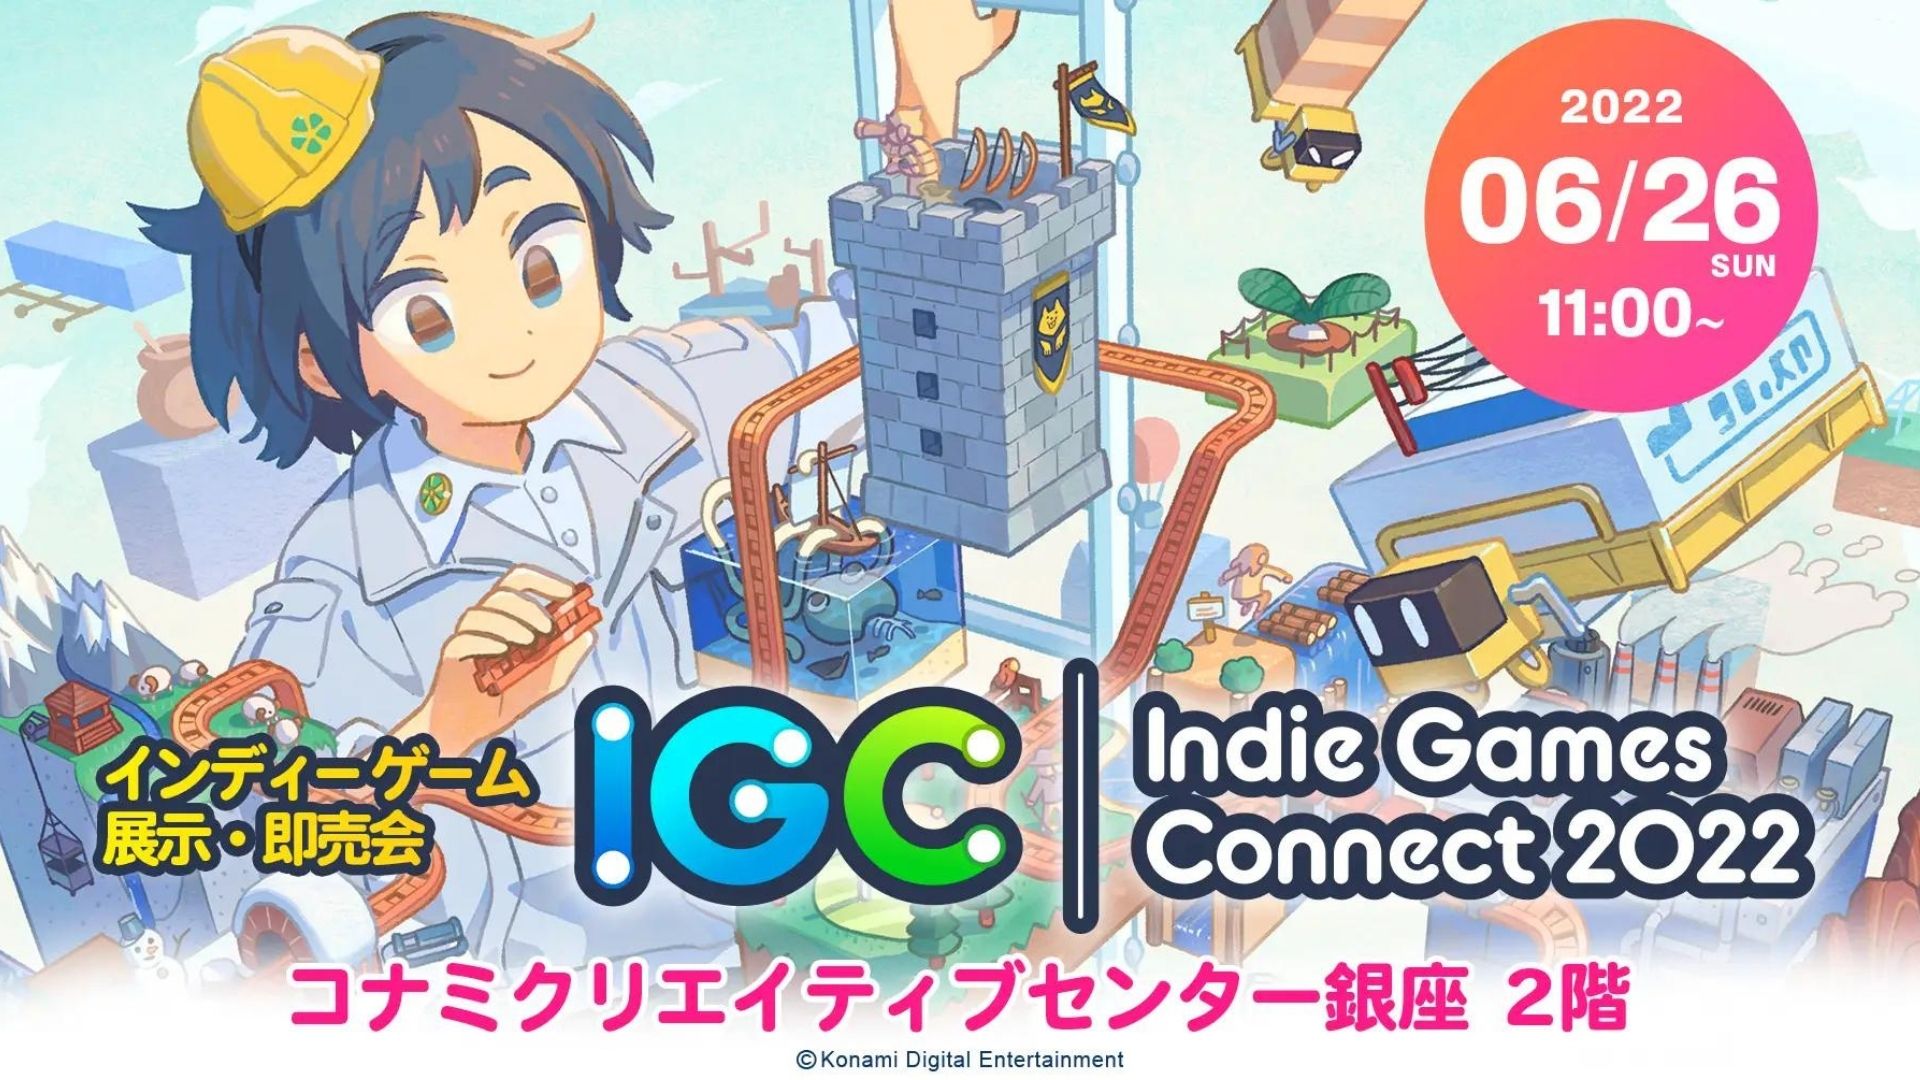 Konami จะเป็นเจ้าภาพจัดงาน Indie Games Connect 2022 ในวันที่ 26 มิถุนายนนี้